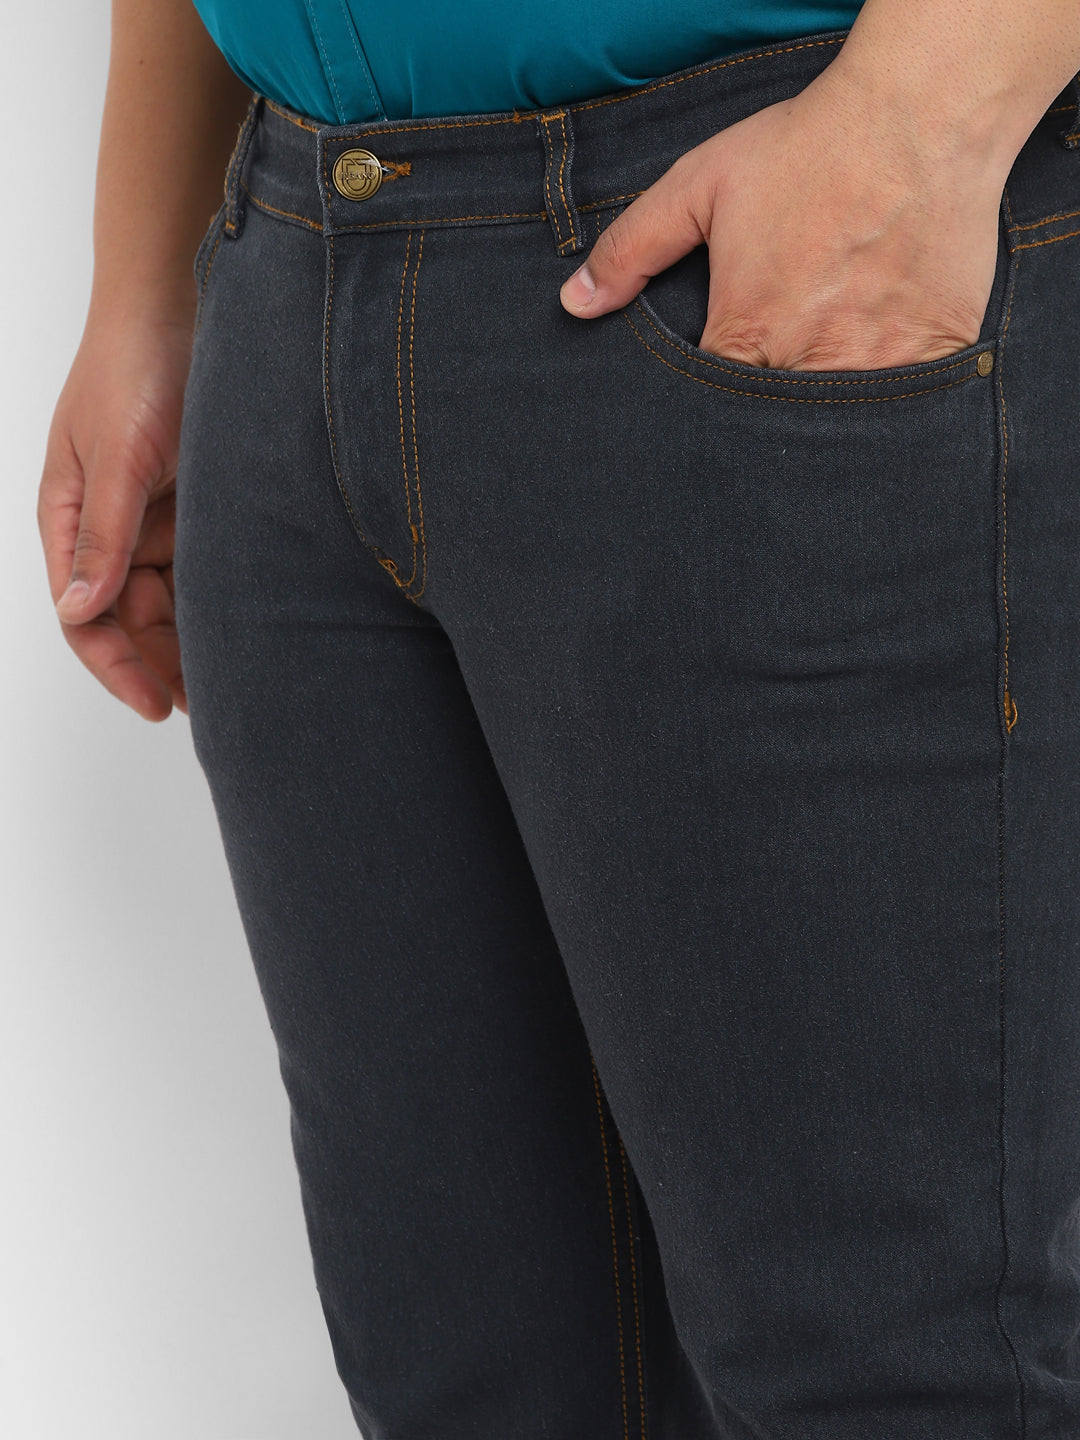 Plus Men's Grey Regular Fit Washed Denim Bootcut Jeans Stretchable